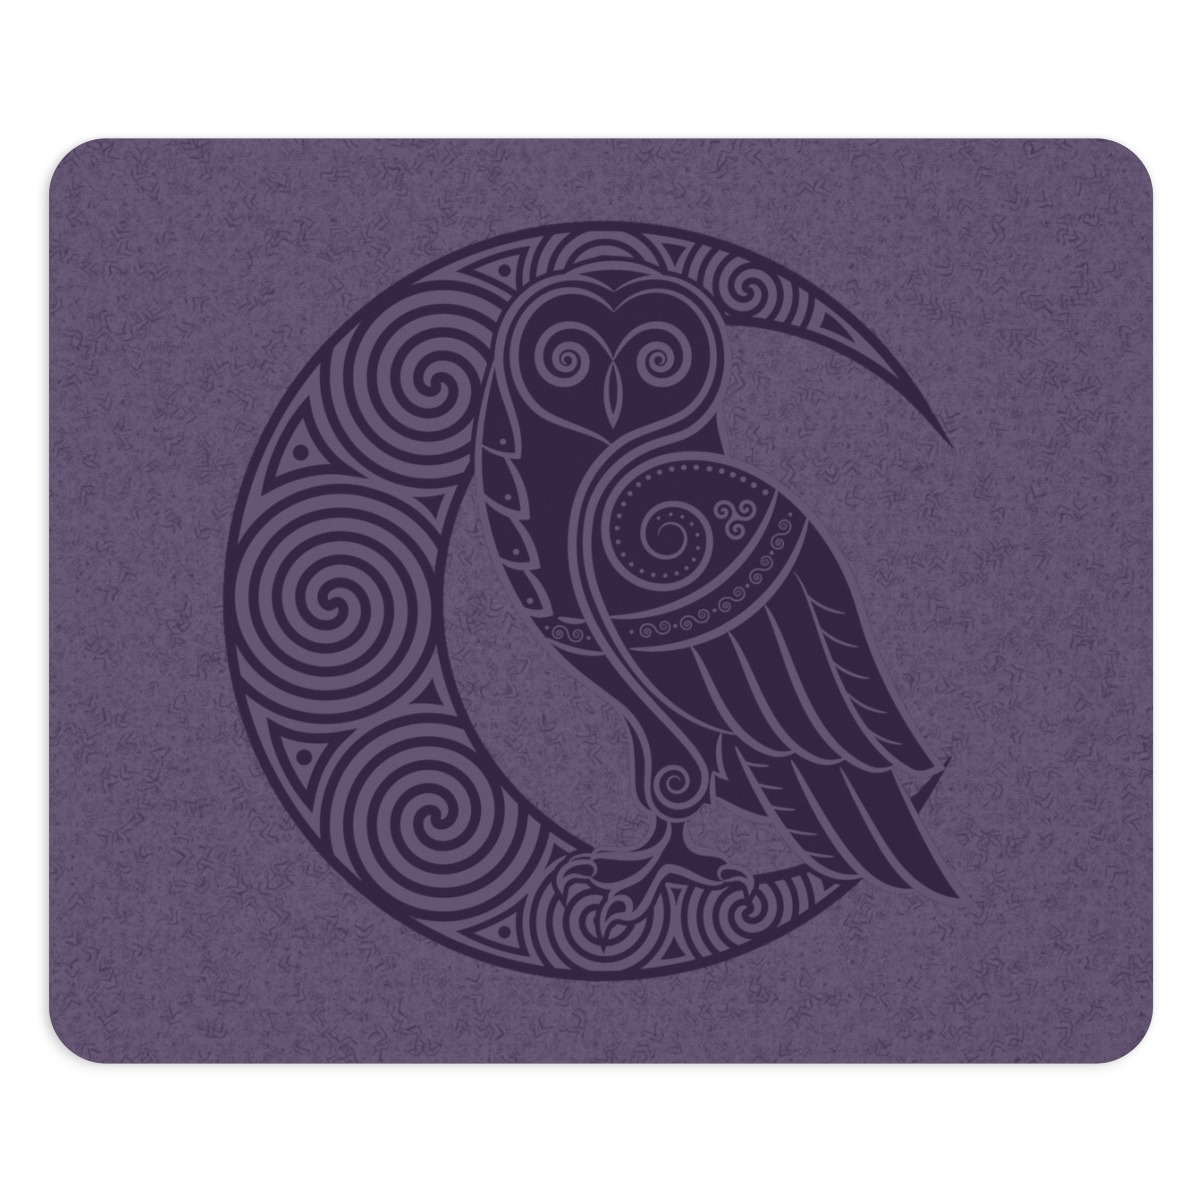 Purple Owl Crescent Moon Mouse Pad